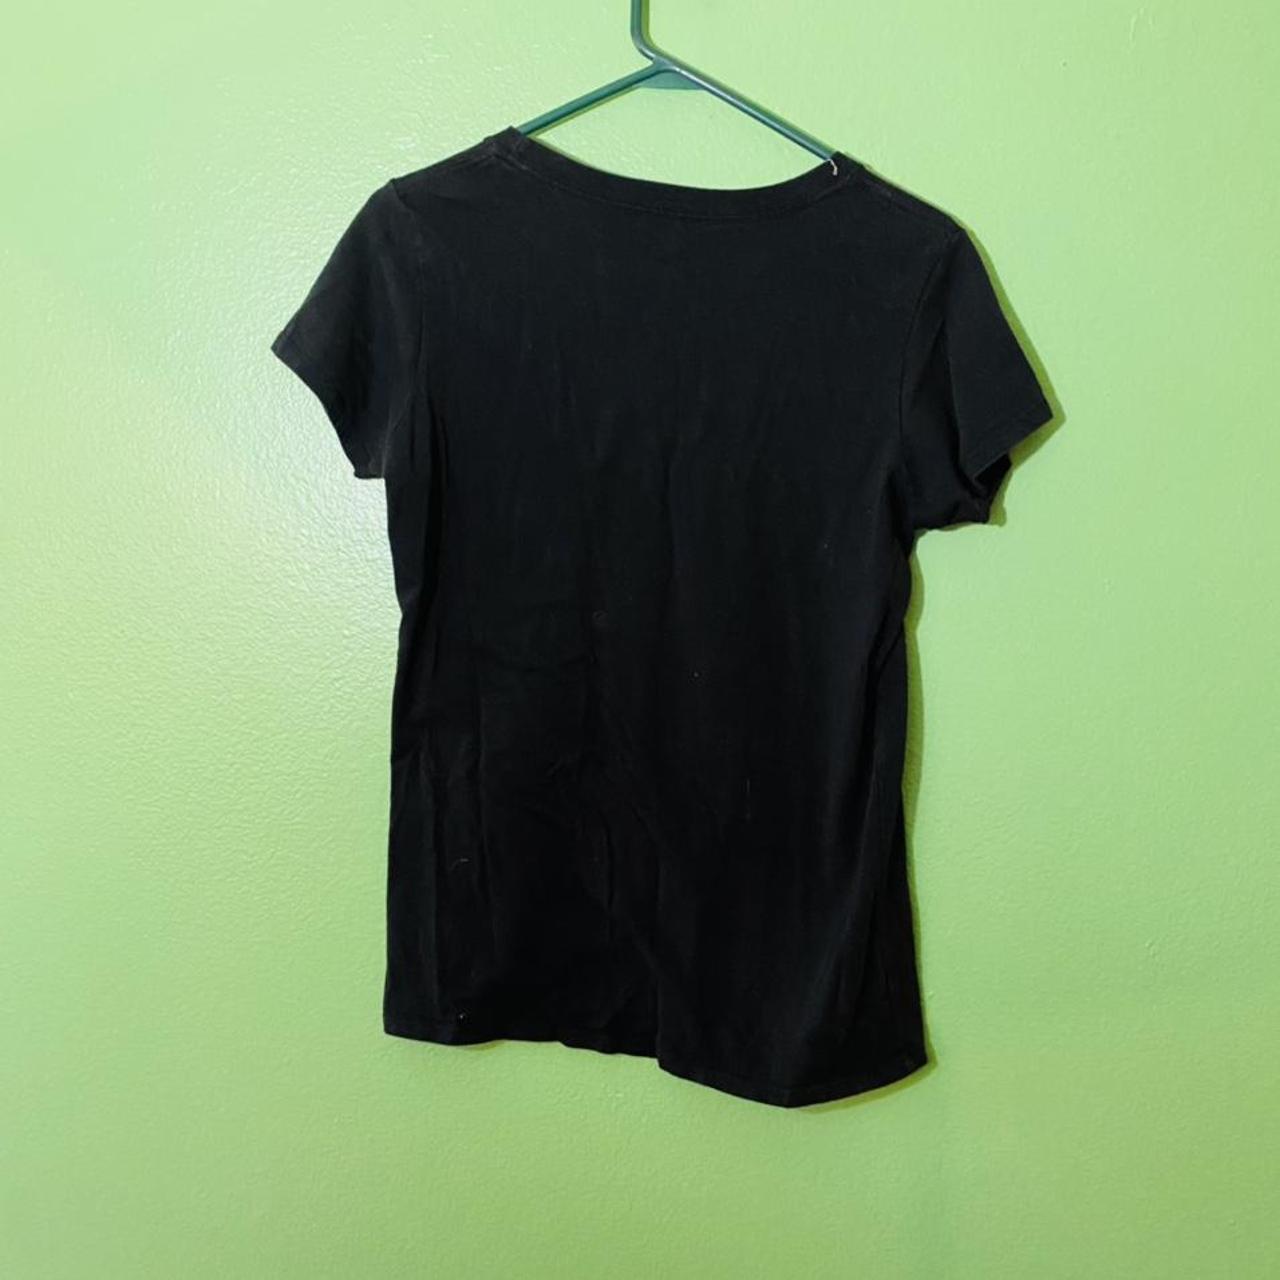 Product Image 2 - Black cat Halloween t shirt